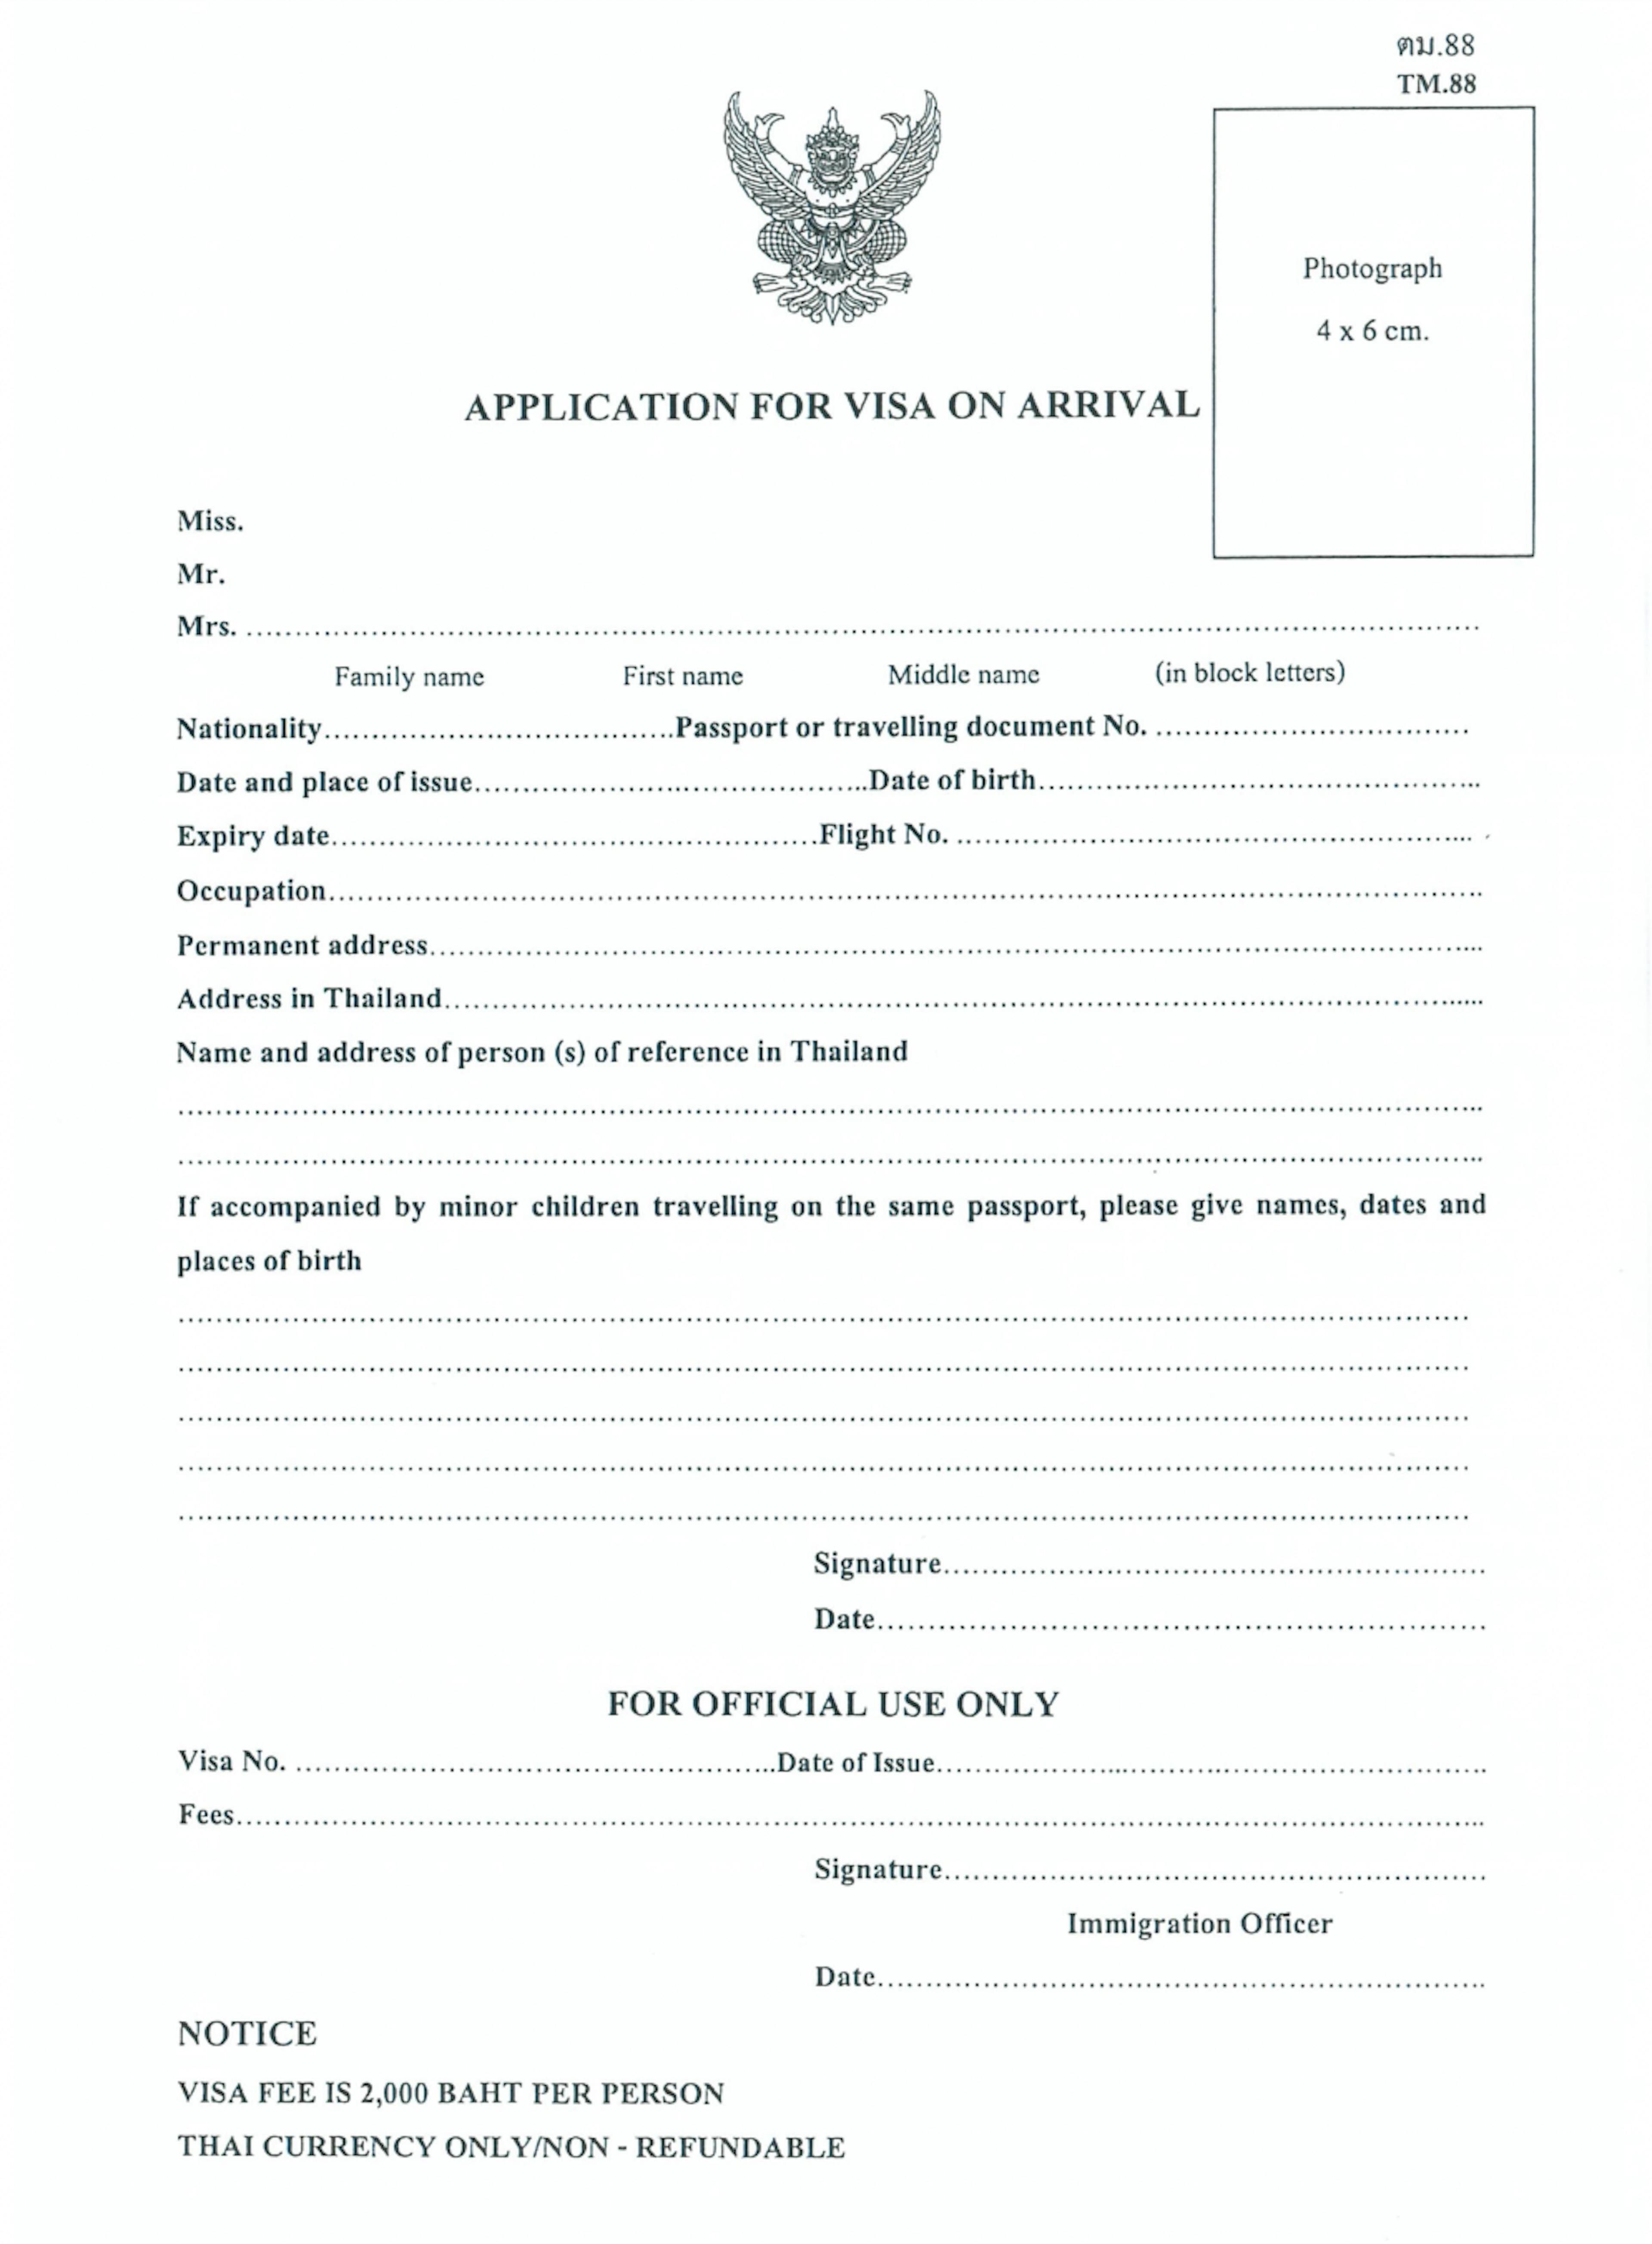 thai visa application for passport pictures